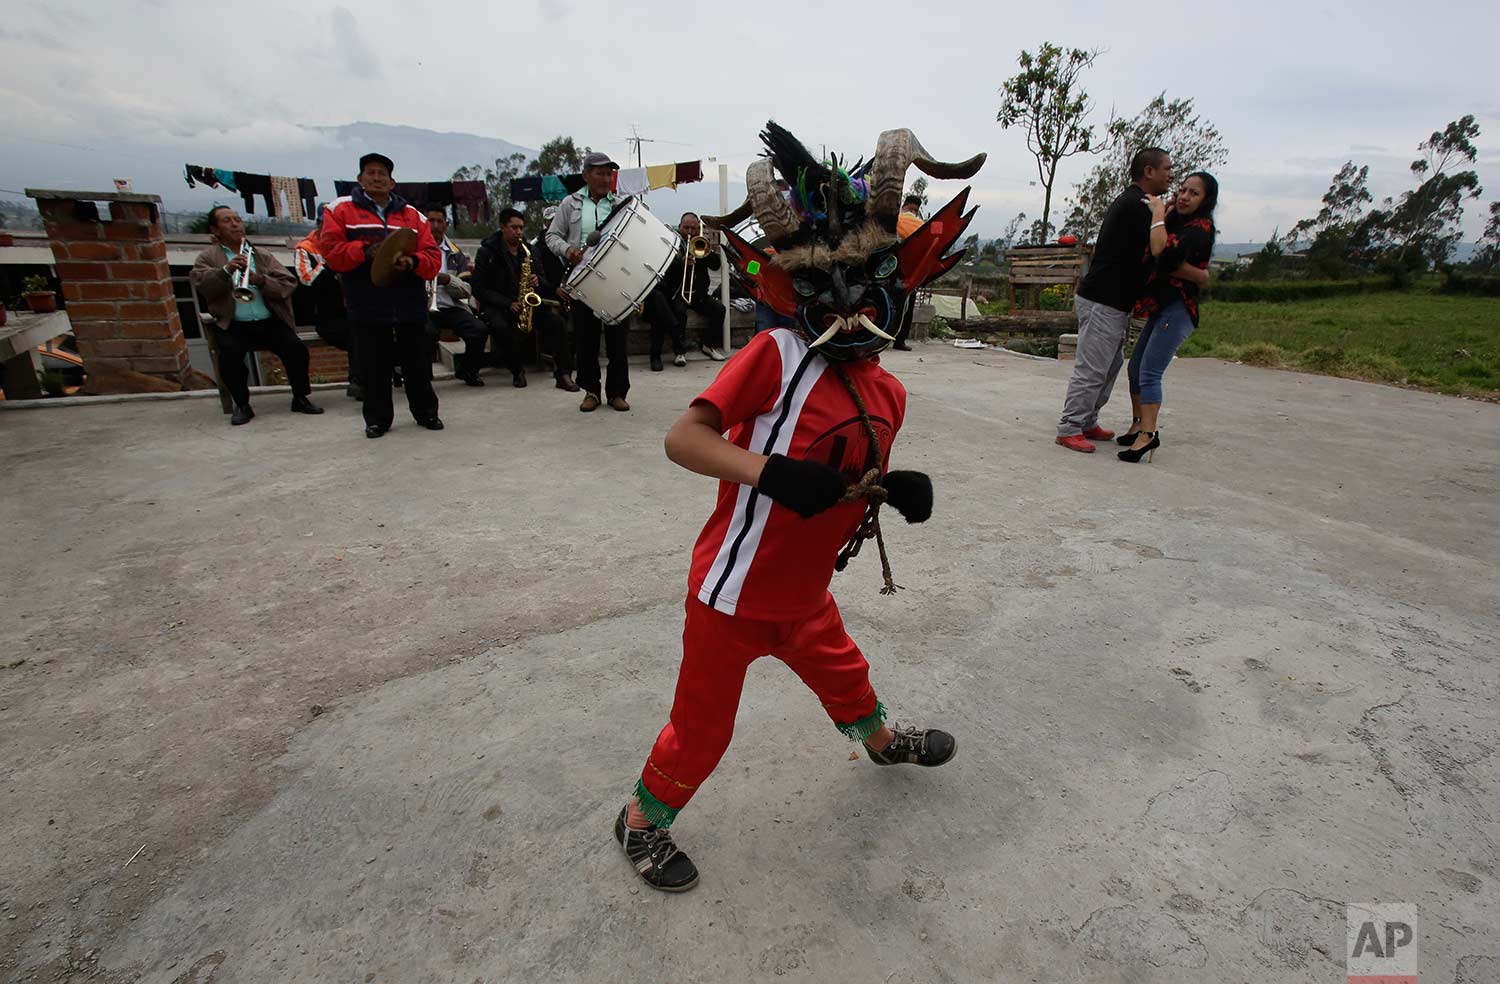  A man wearing a devil mask dances during the traditional New Year's festival known as "La Diablada", in Pillaro, Ecuador, Friday, Jan. 5, 2018. (AP Photo/Dolores Ochoa) 